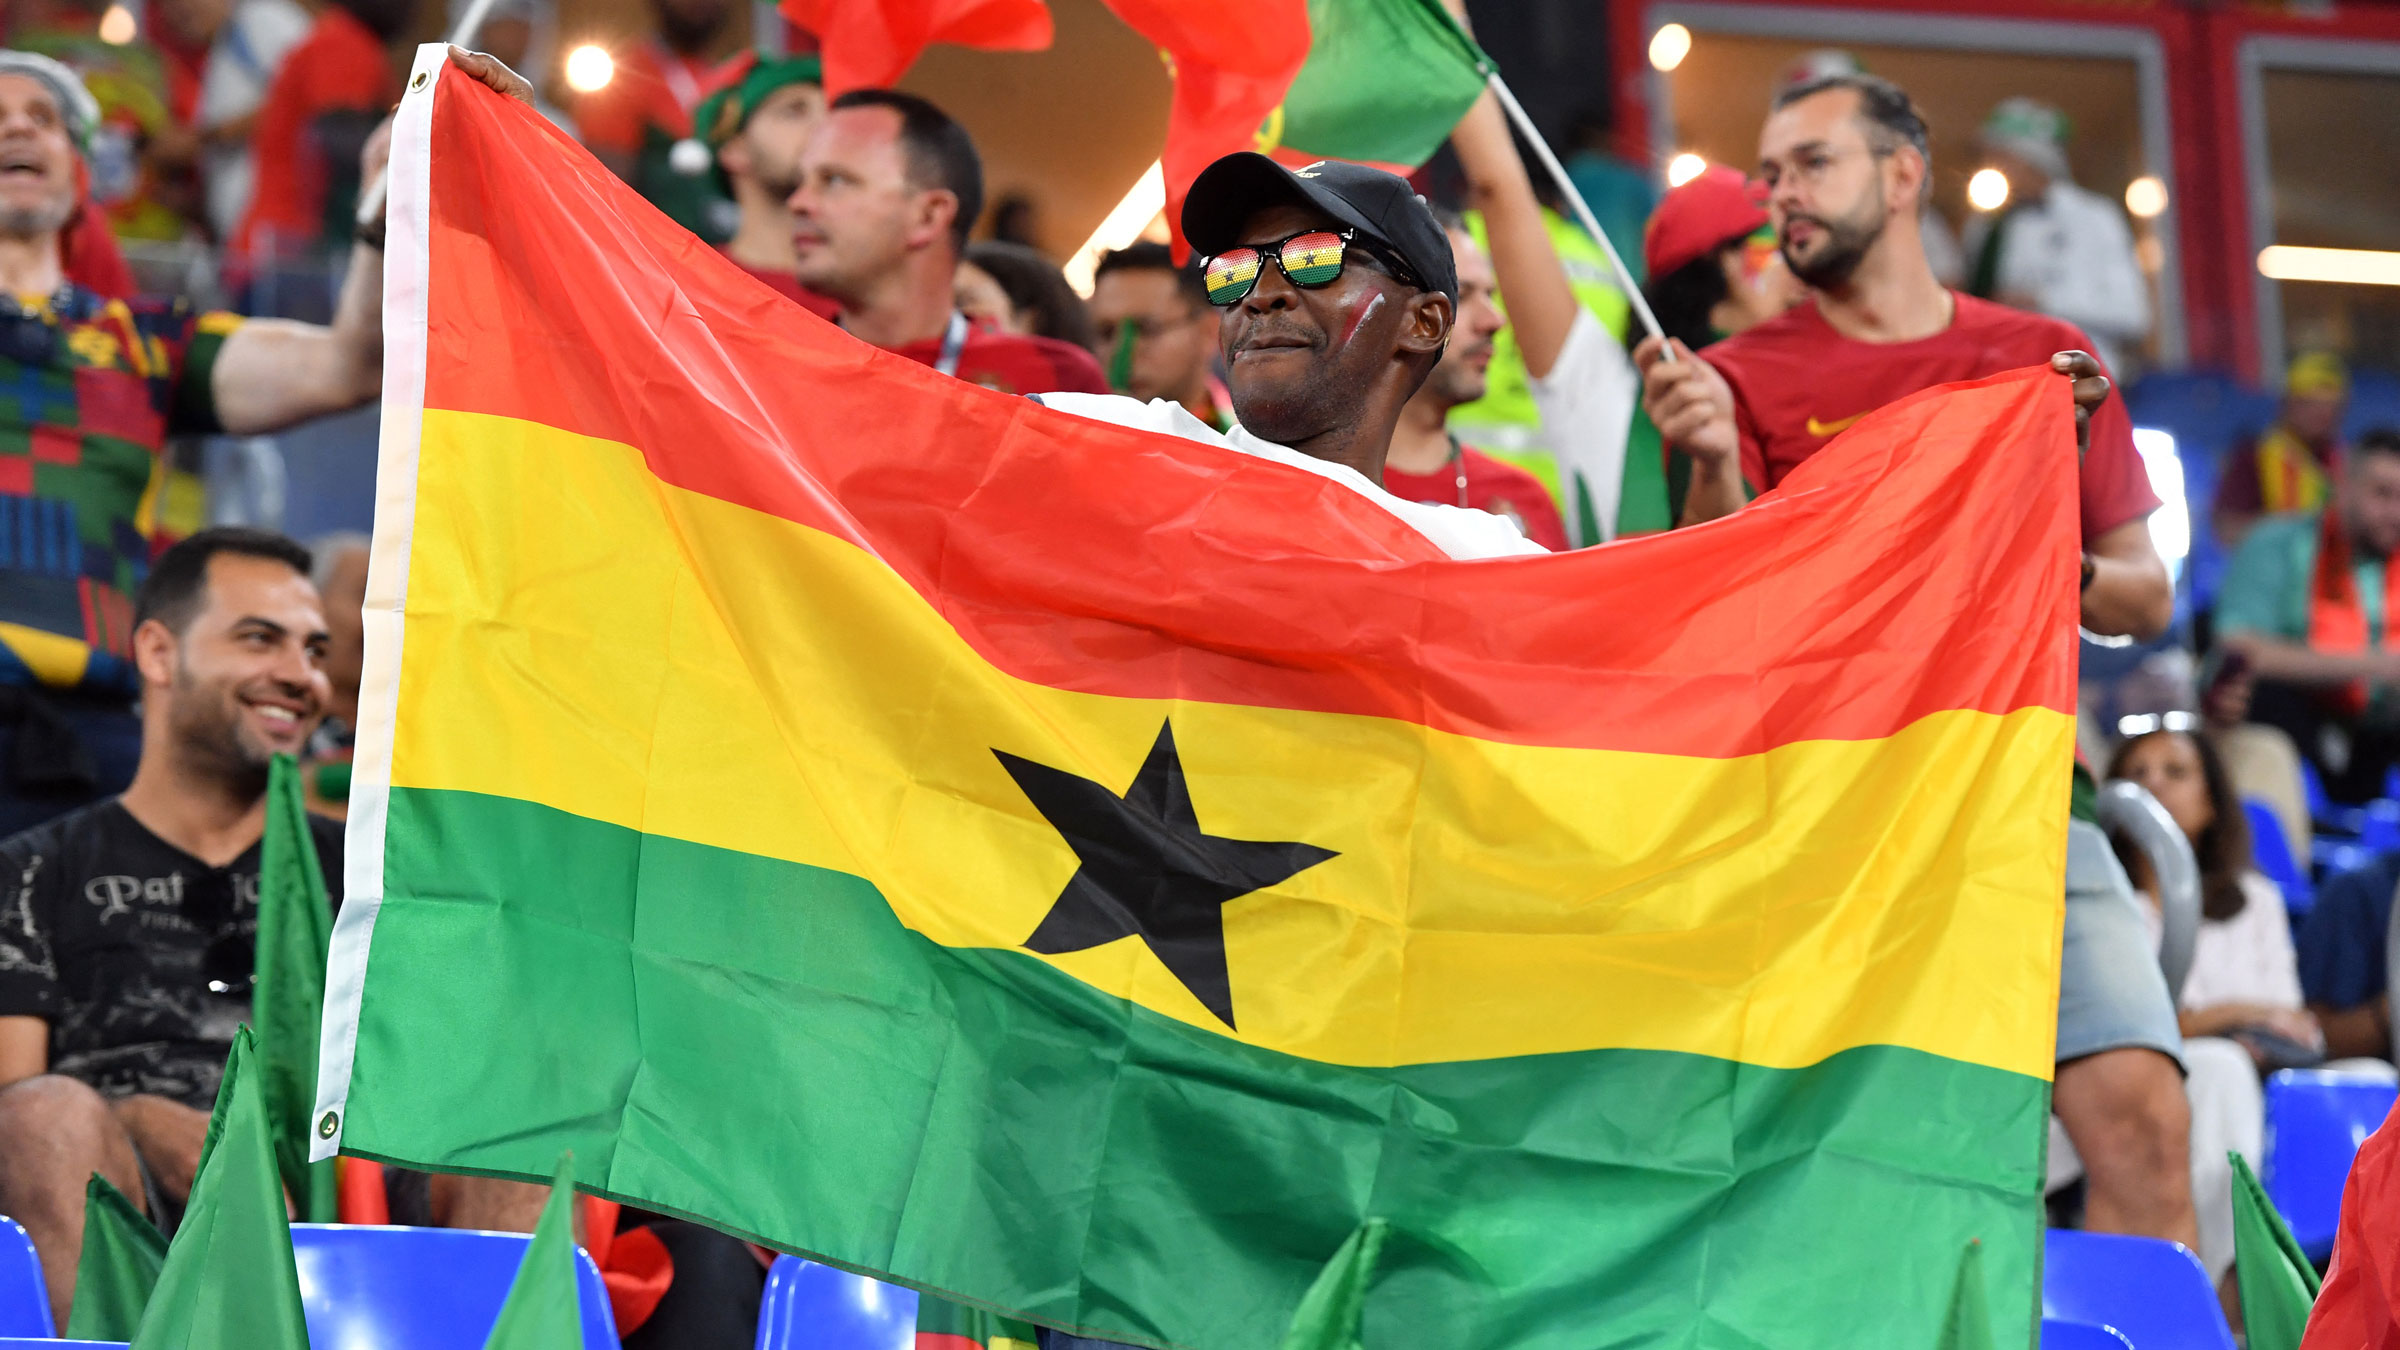 A Ghana fan holds up a flag inside the stadium.